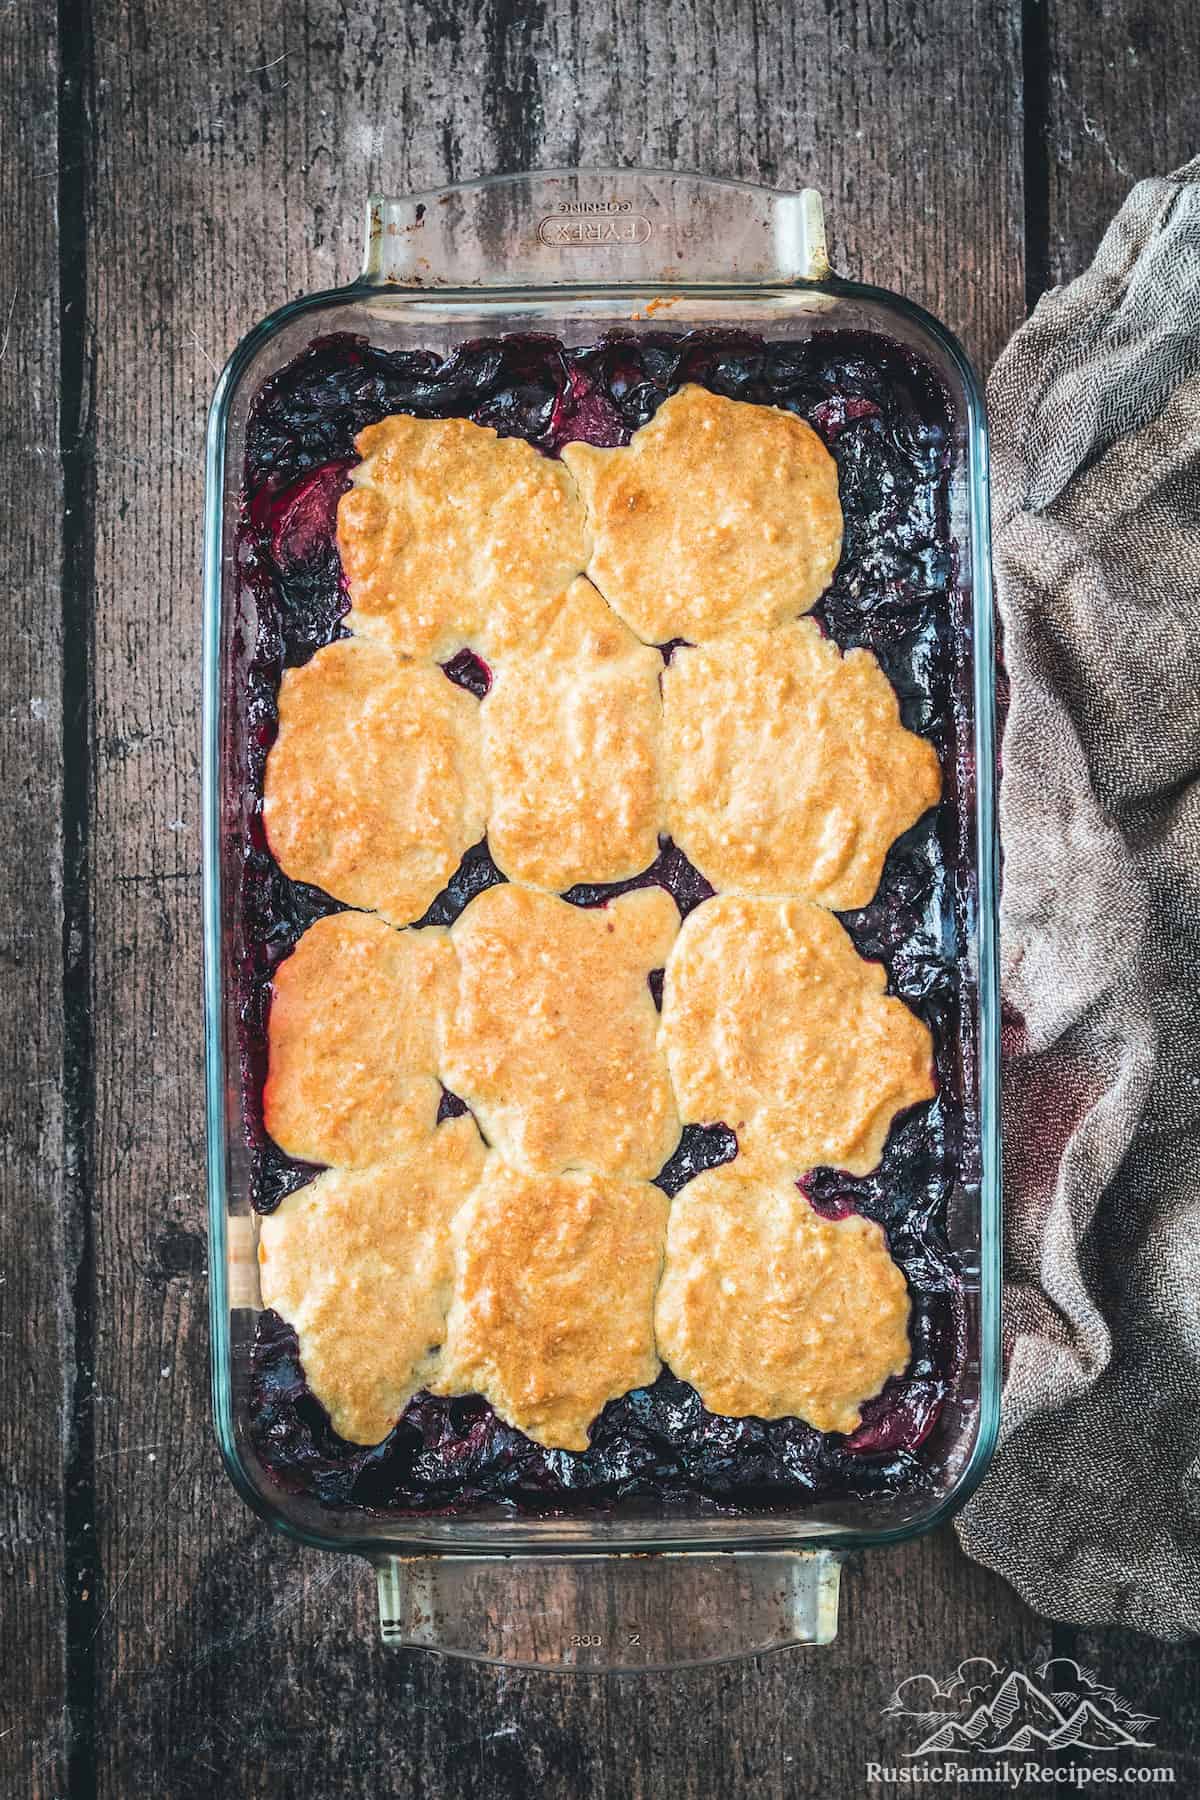 Blueberry peach cobbler in a glass baking pan